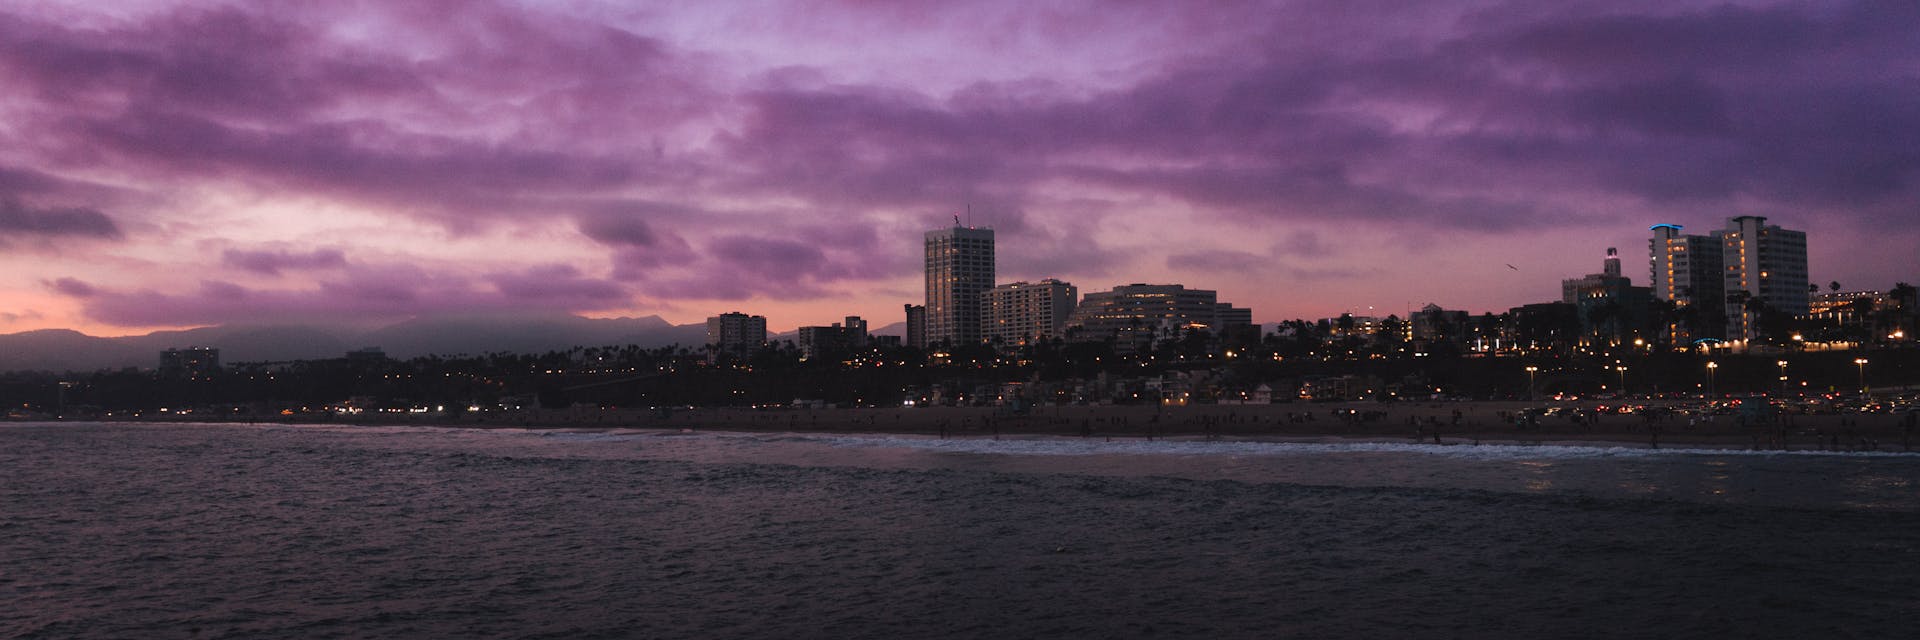 Panoramic Shot of City Waterfront at Sunset